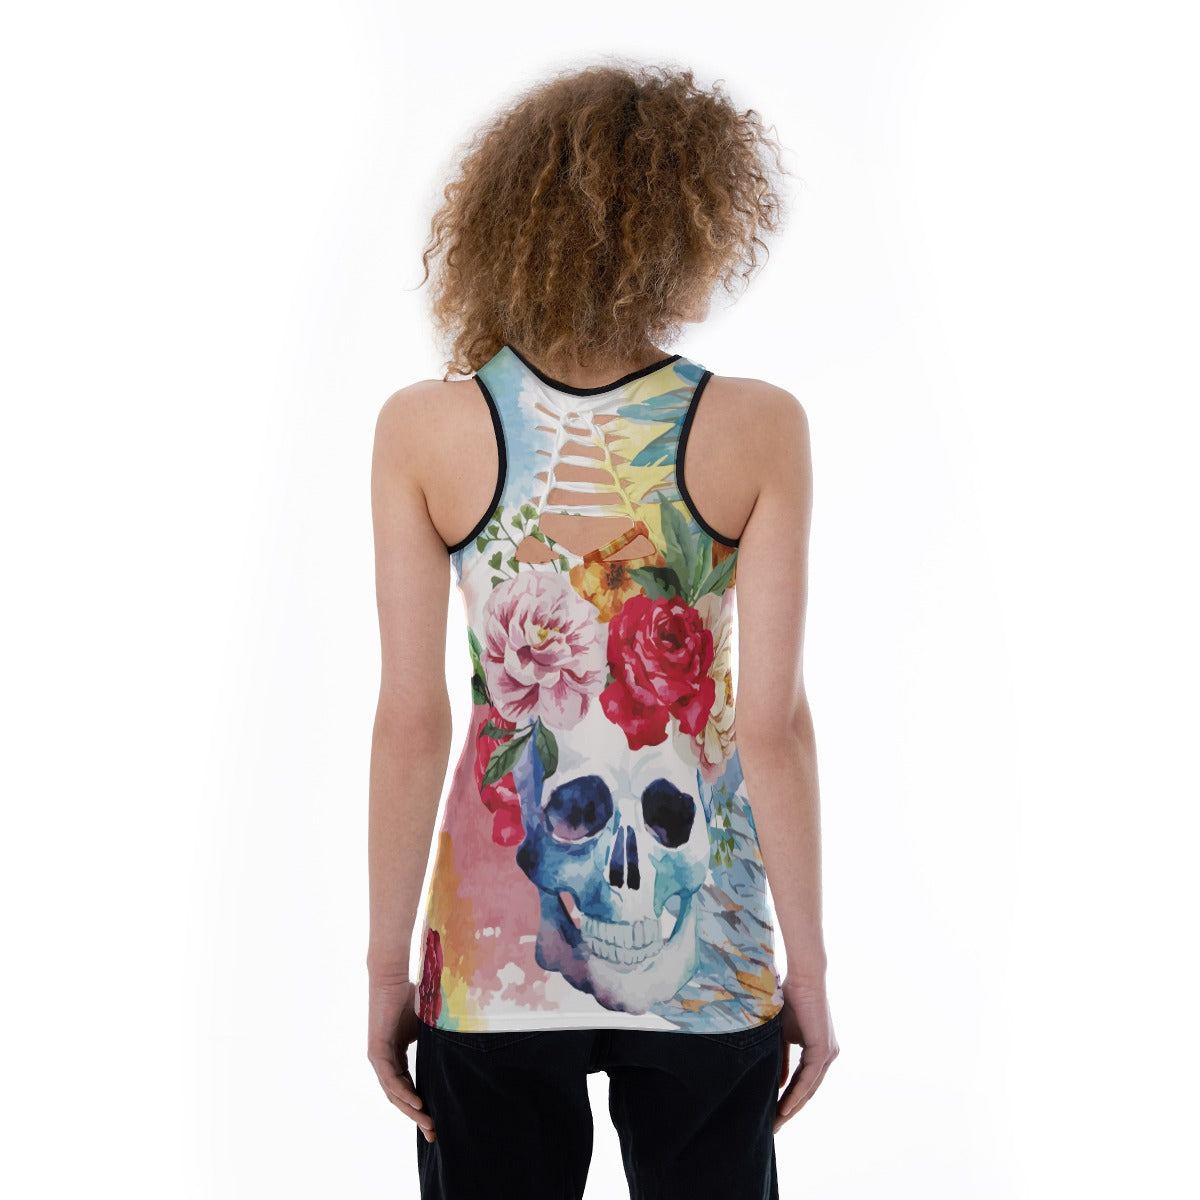 Skull floral Women's Back Hollow Tank Top, Sugar skull tank top, sugar skull shirt